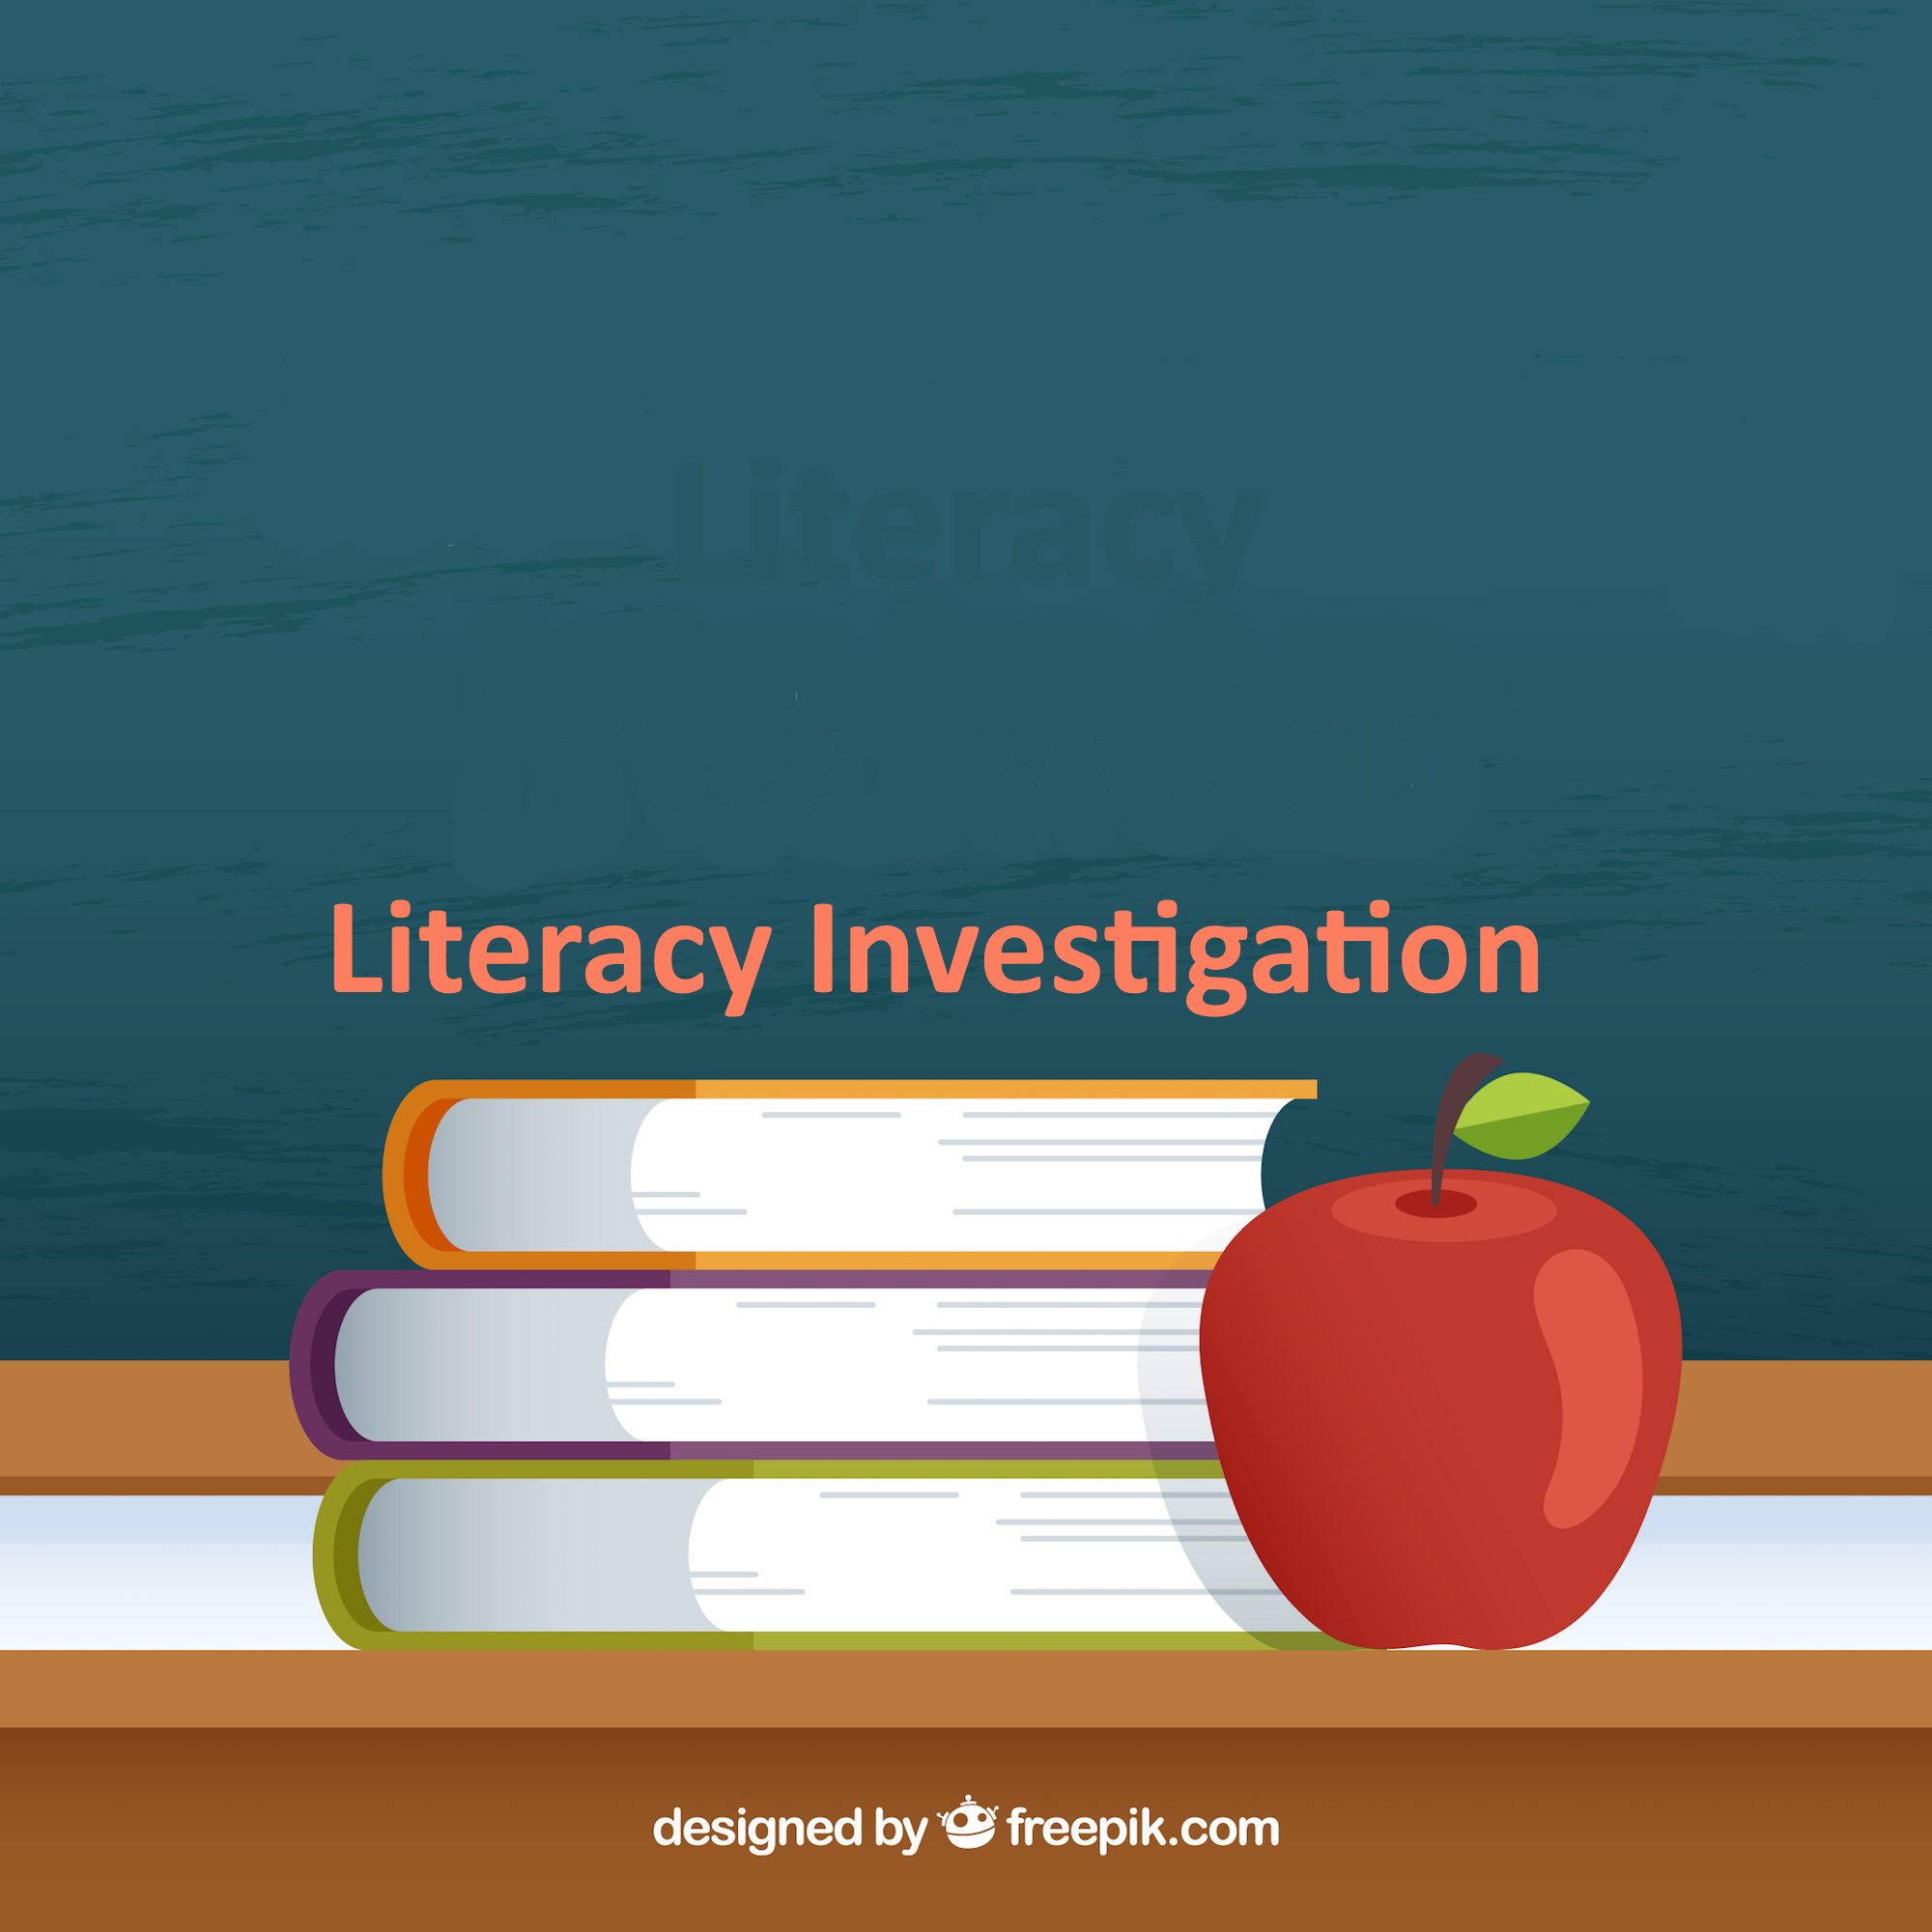 Literacy Investigation